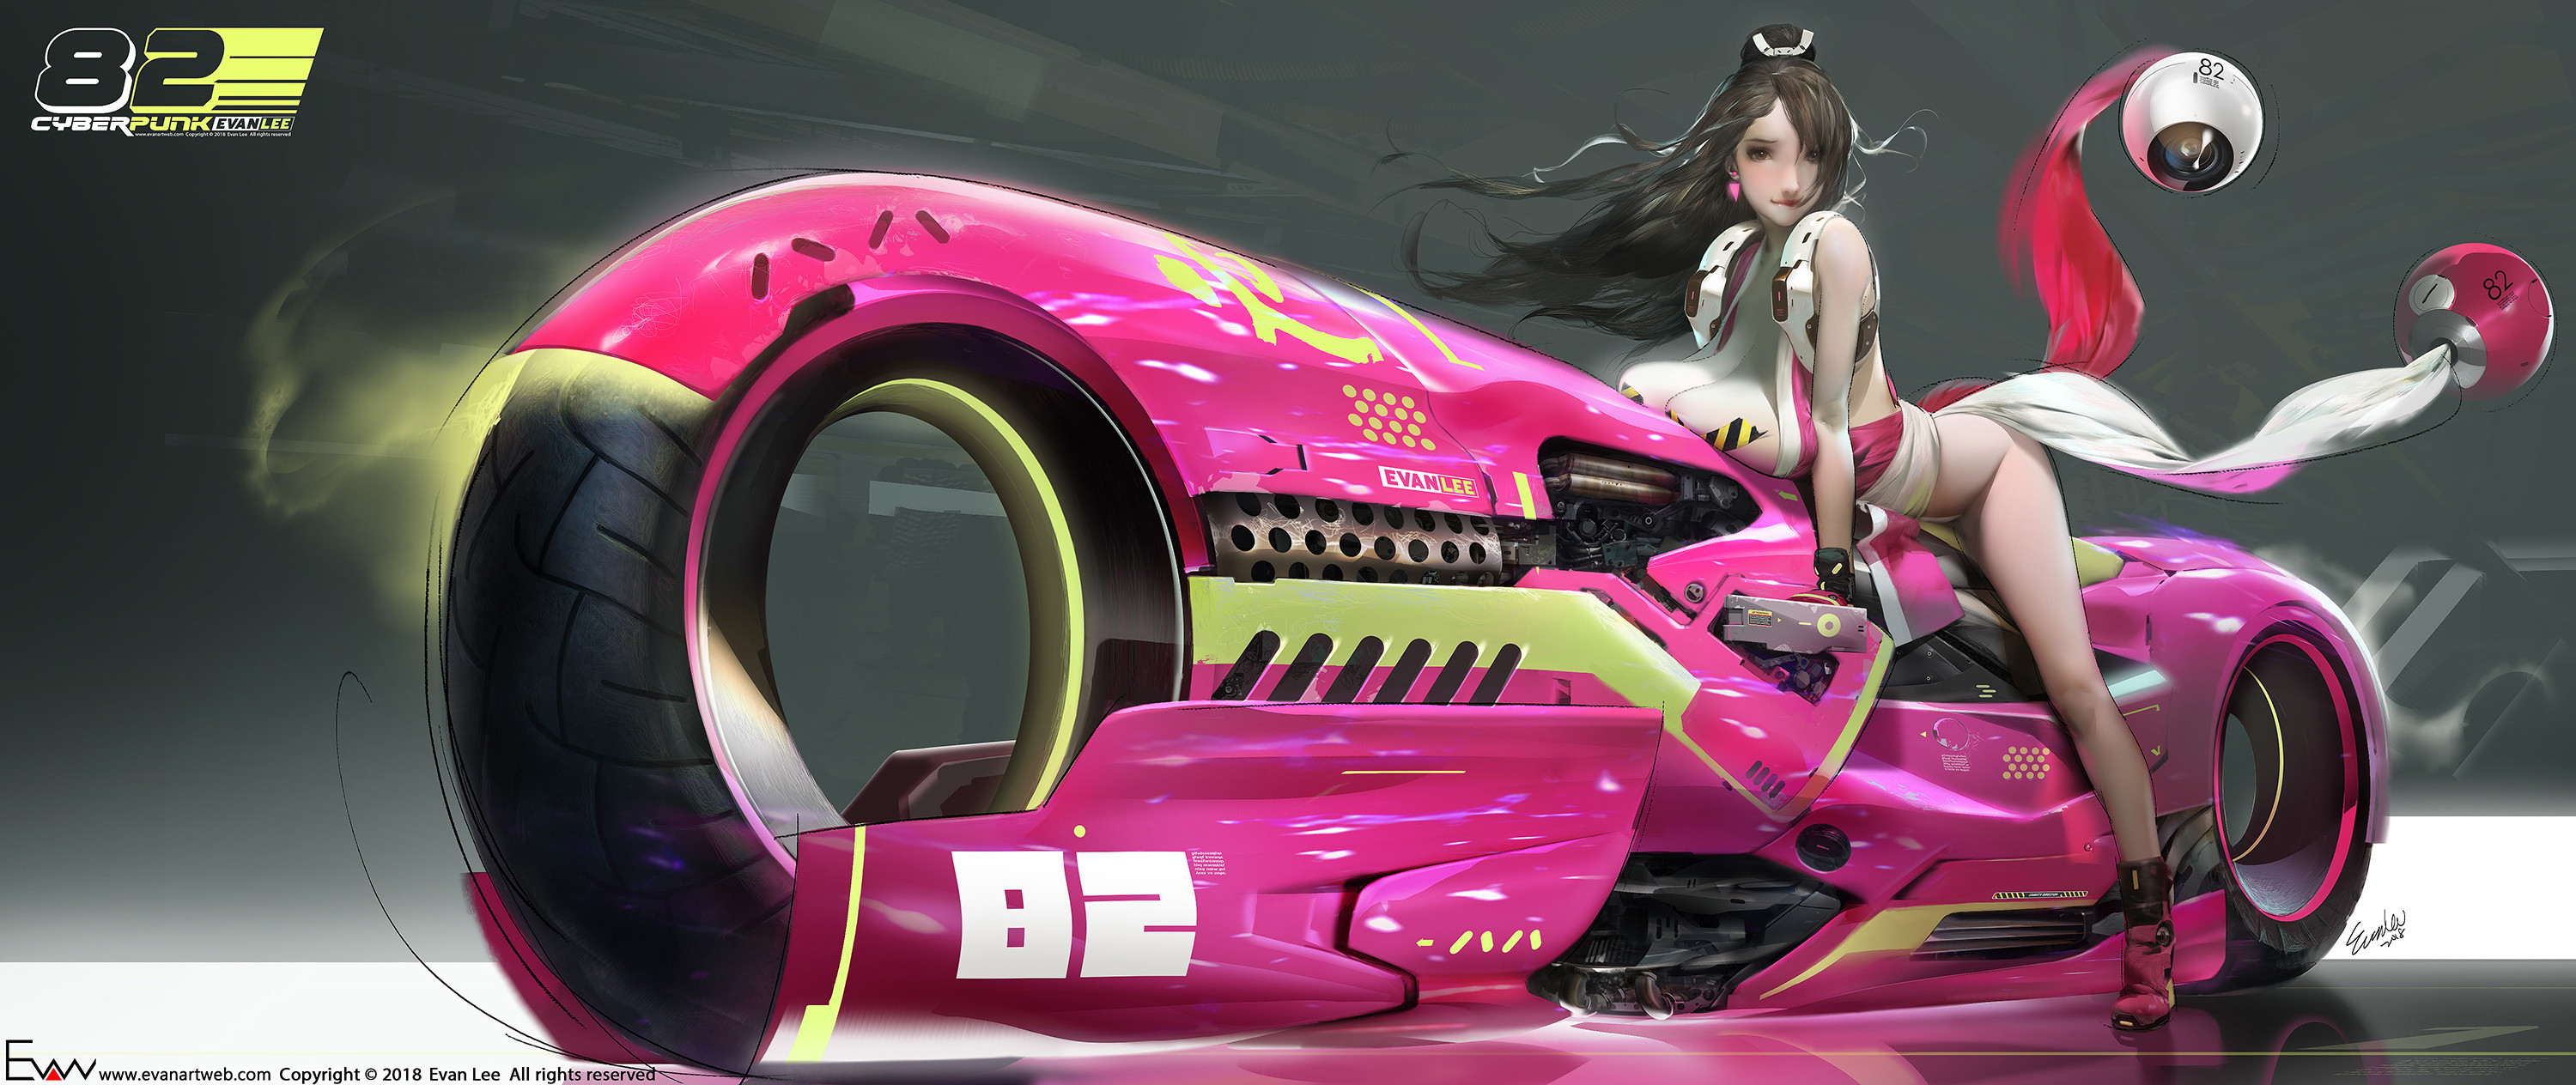 Anime 3000x1264 anime girls anime original characters Evan Lee motorcycle ArtStation big boobs long hair cyberpunk